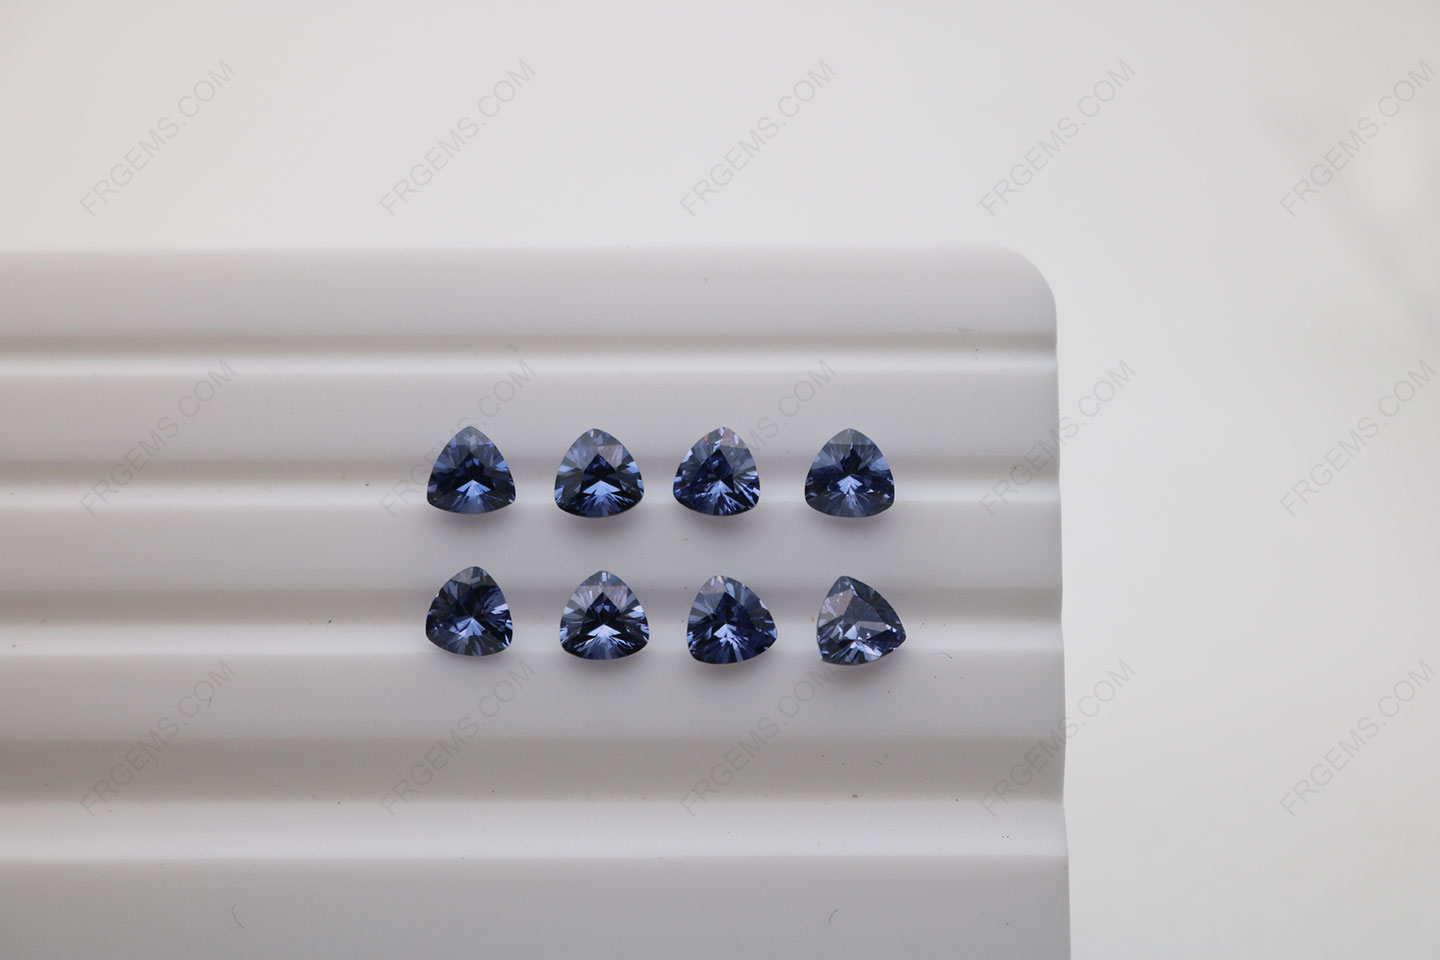 Cubic_Zirconia_Tanzanite_Trillion_Shape_Diamond_faceted_cut_5x5mm_stones_IMG_4904